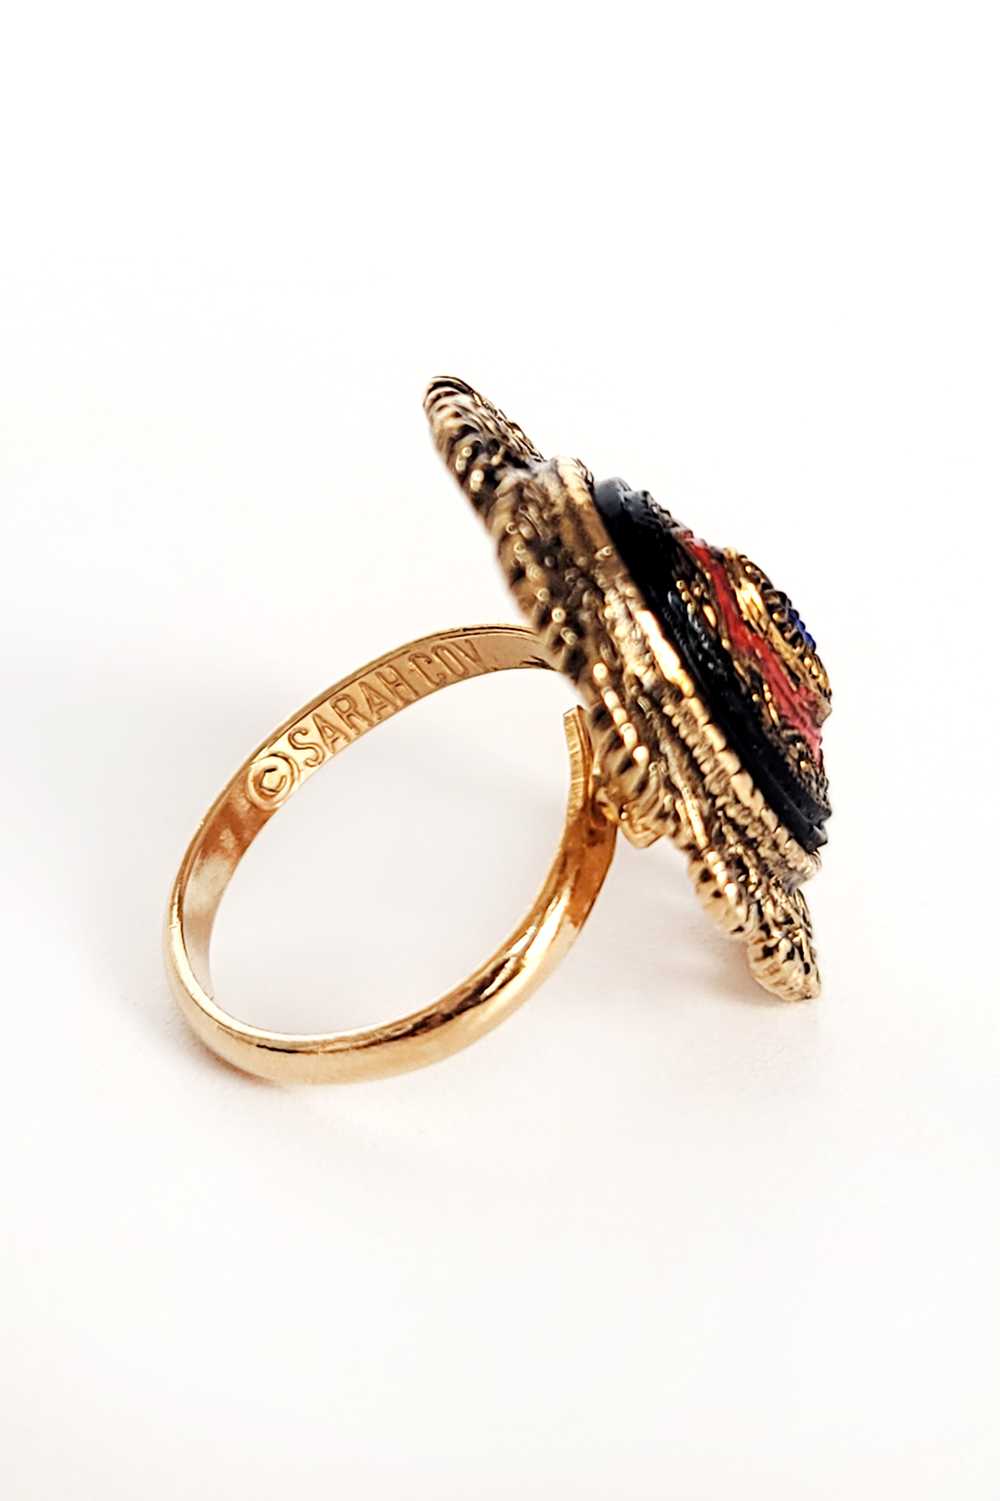 70's Ornate Gold tone ring - image 2